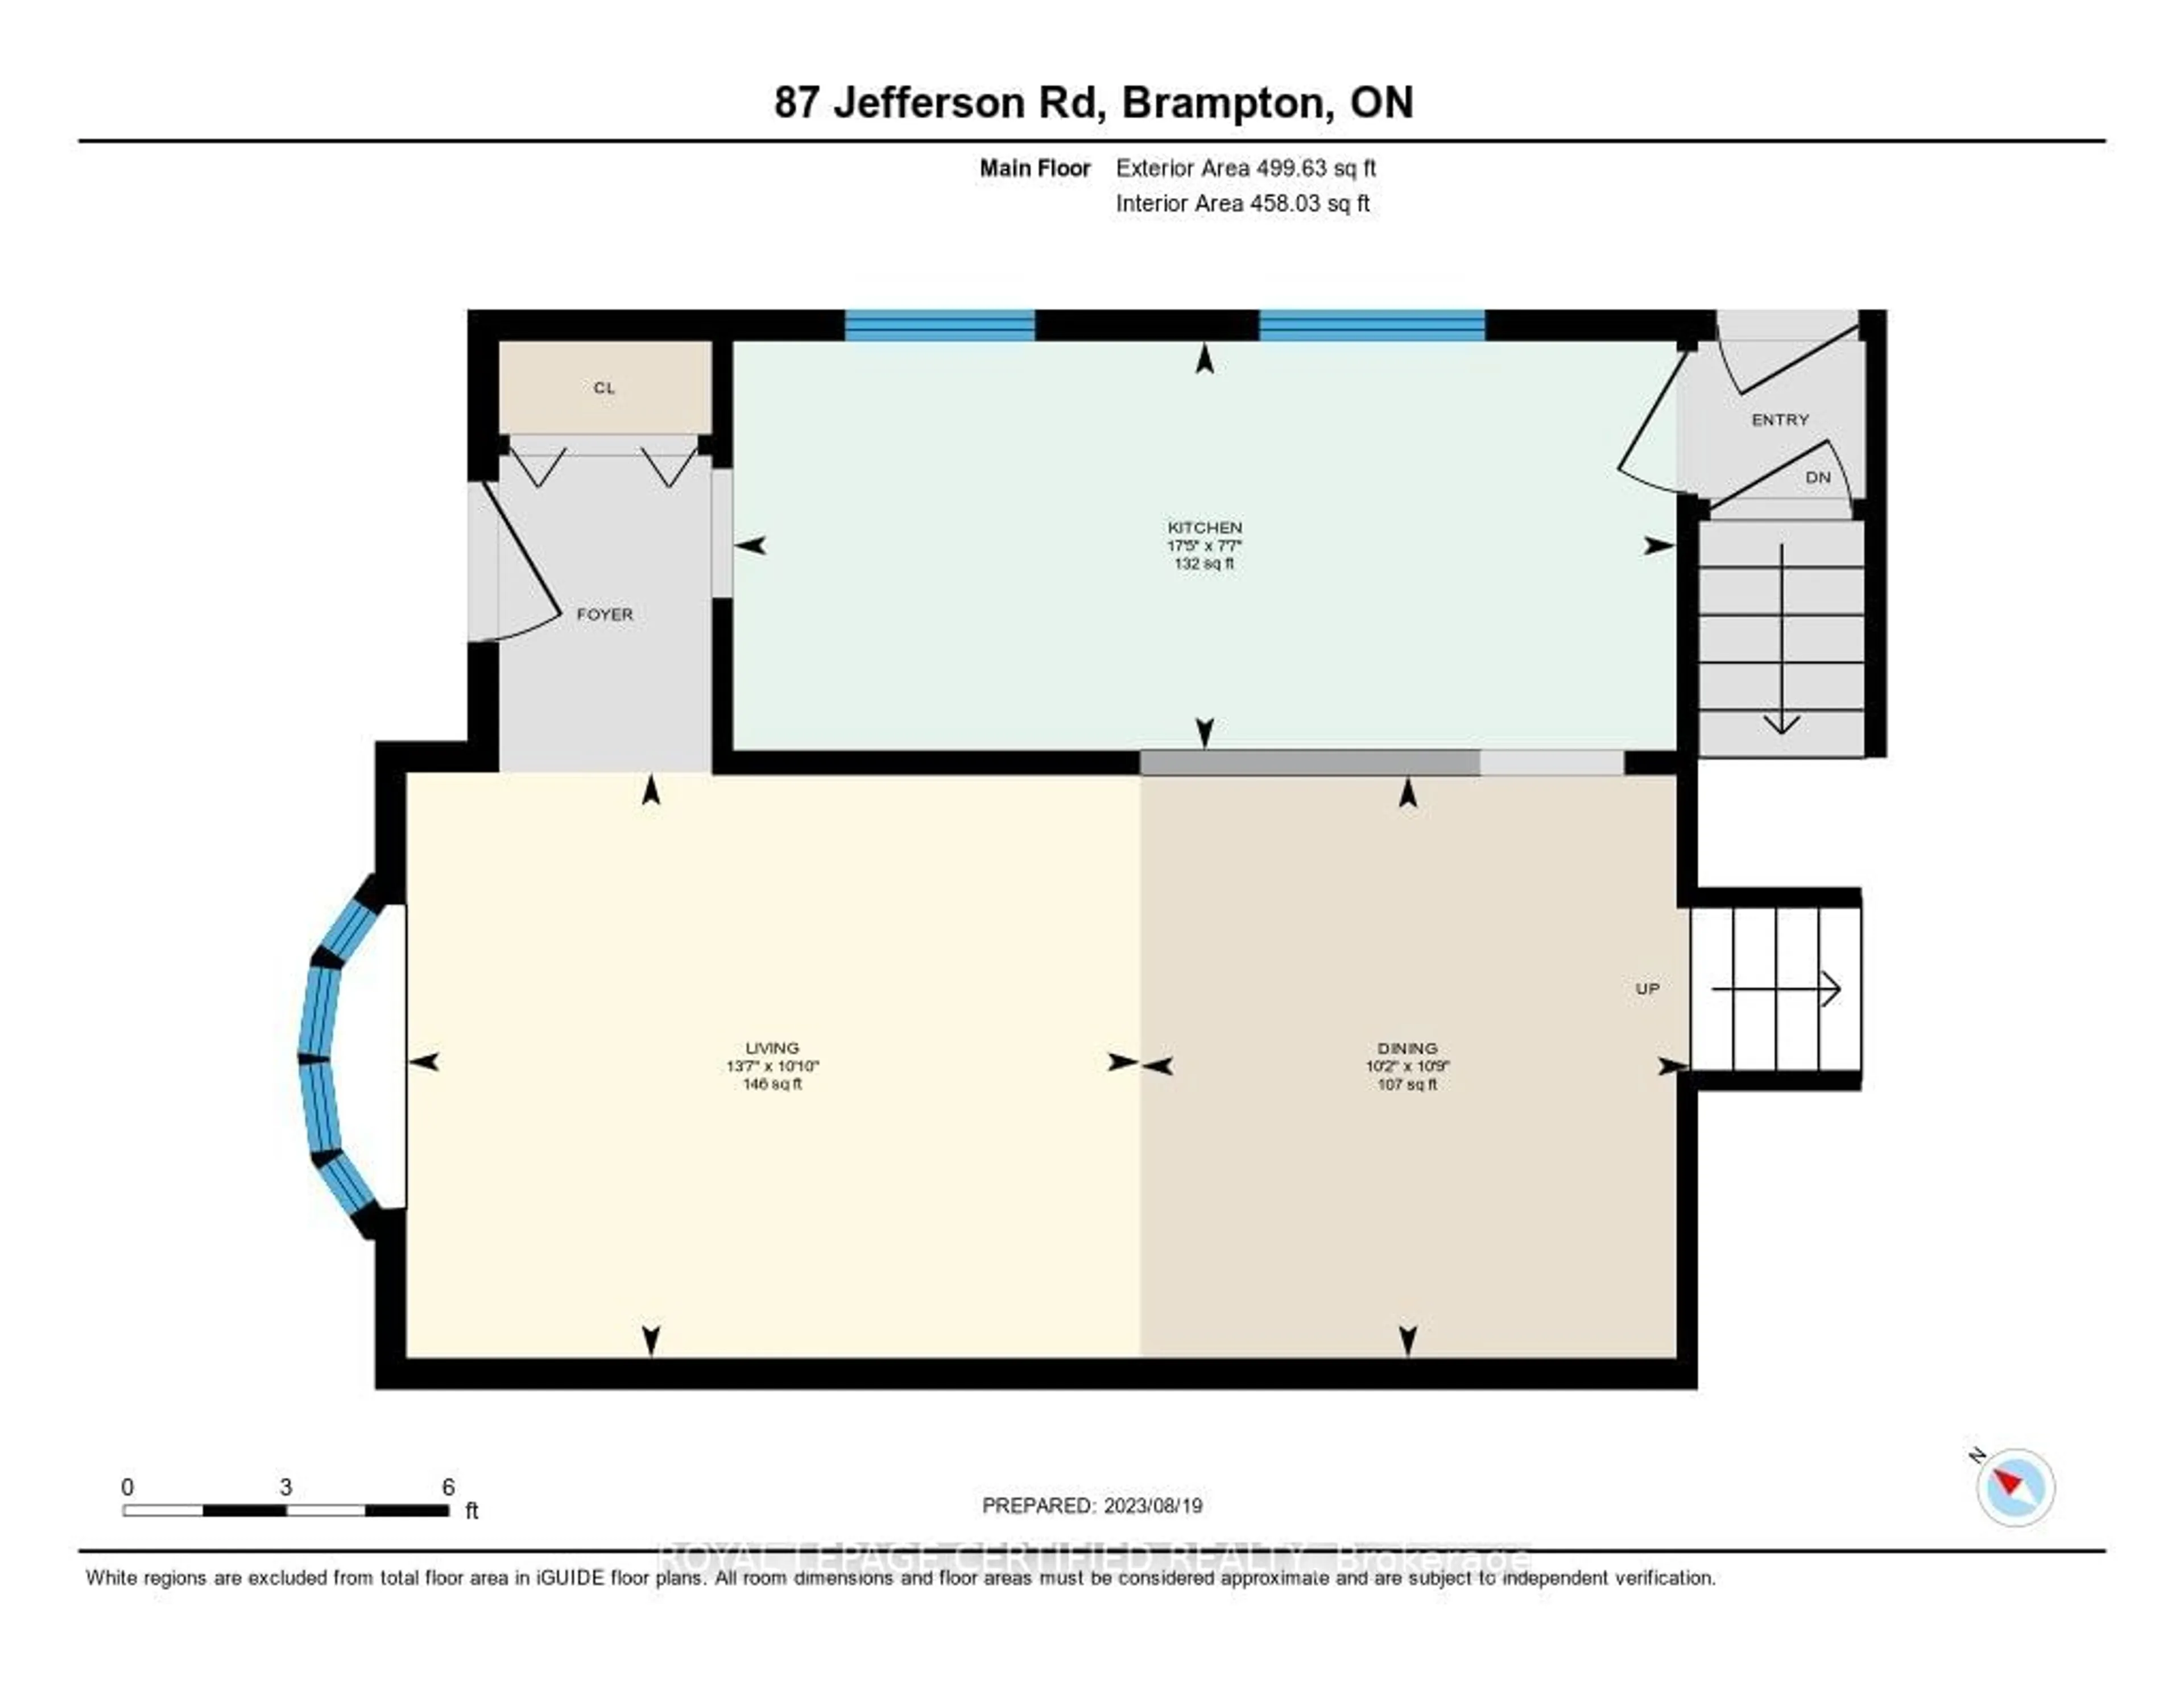 Floor plan for 87 Jefferson Rd, Brampton Ontario L6S 1W7